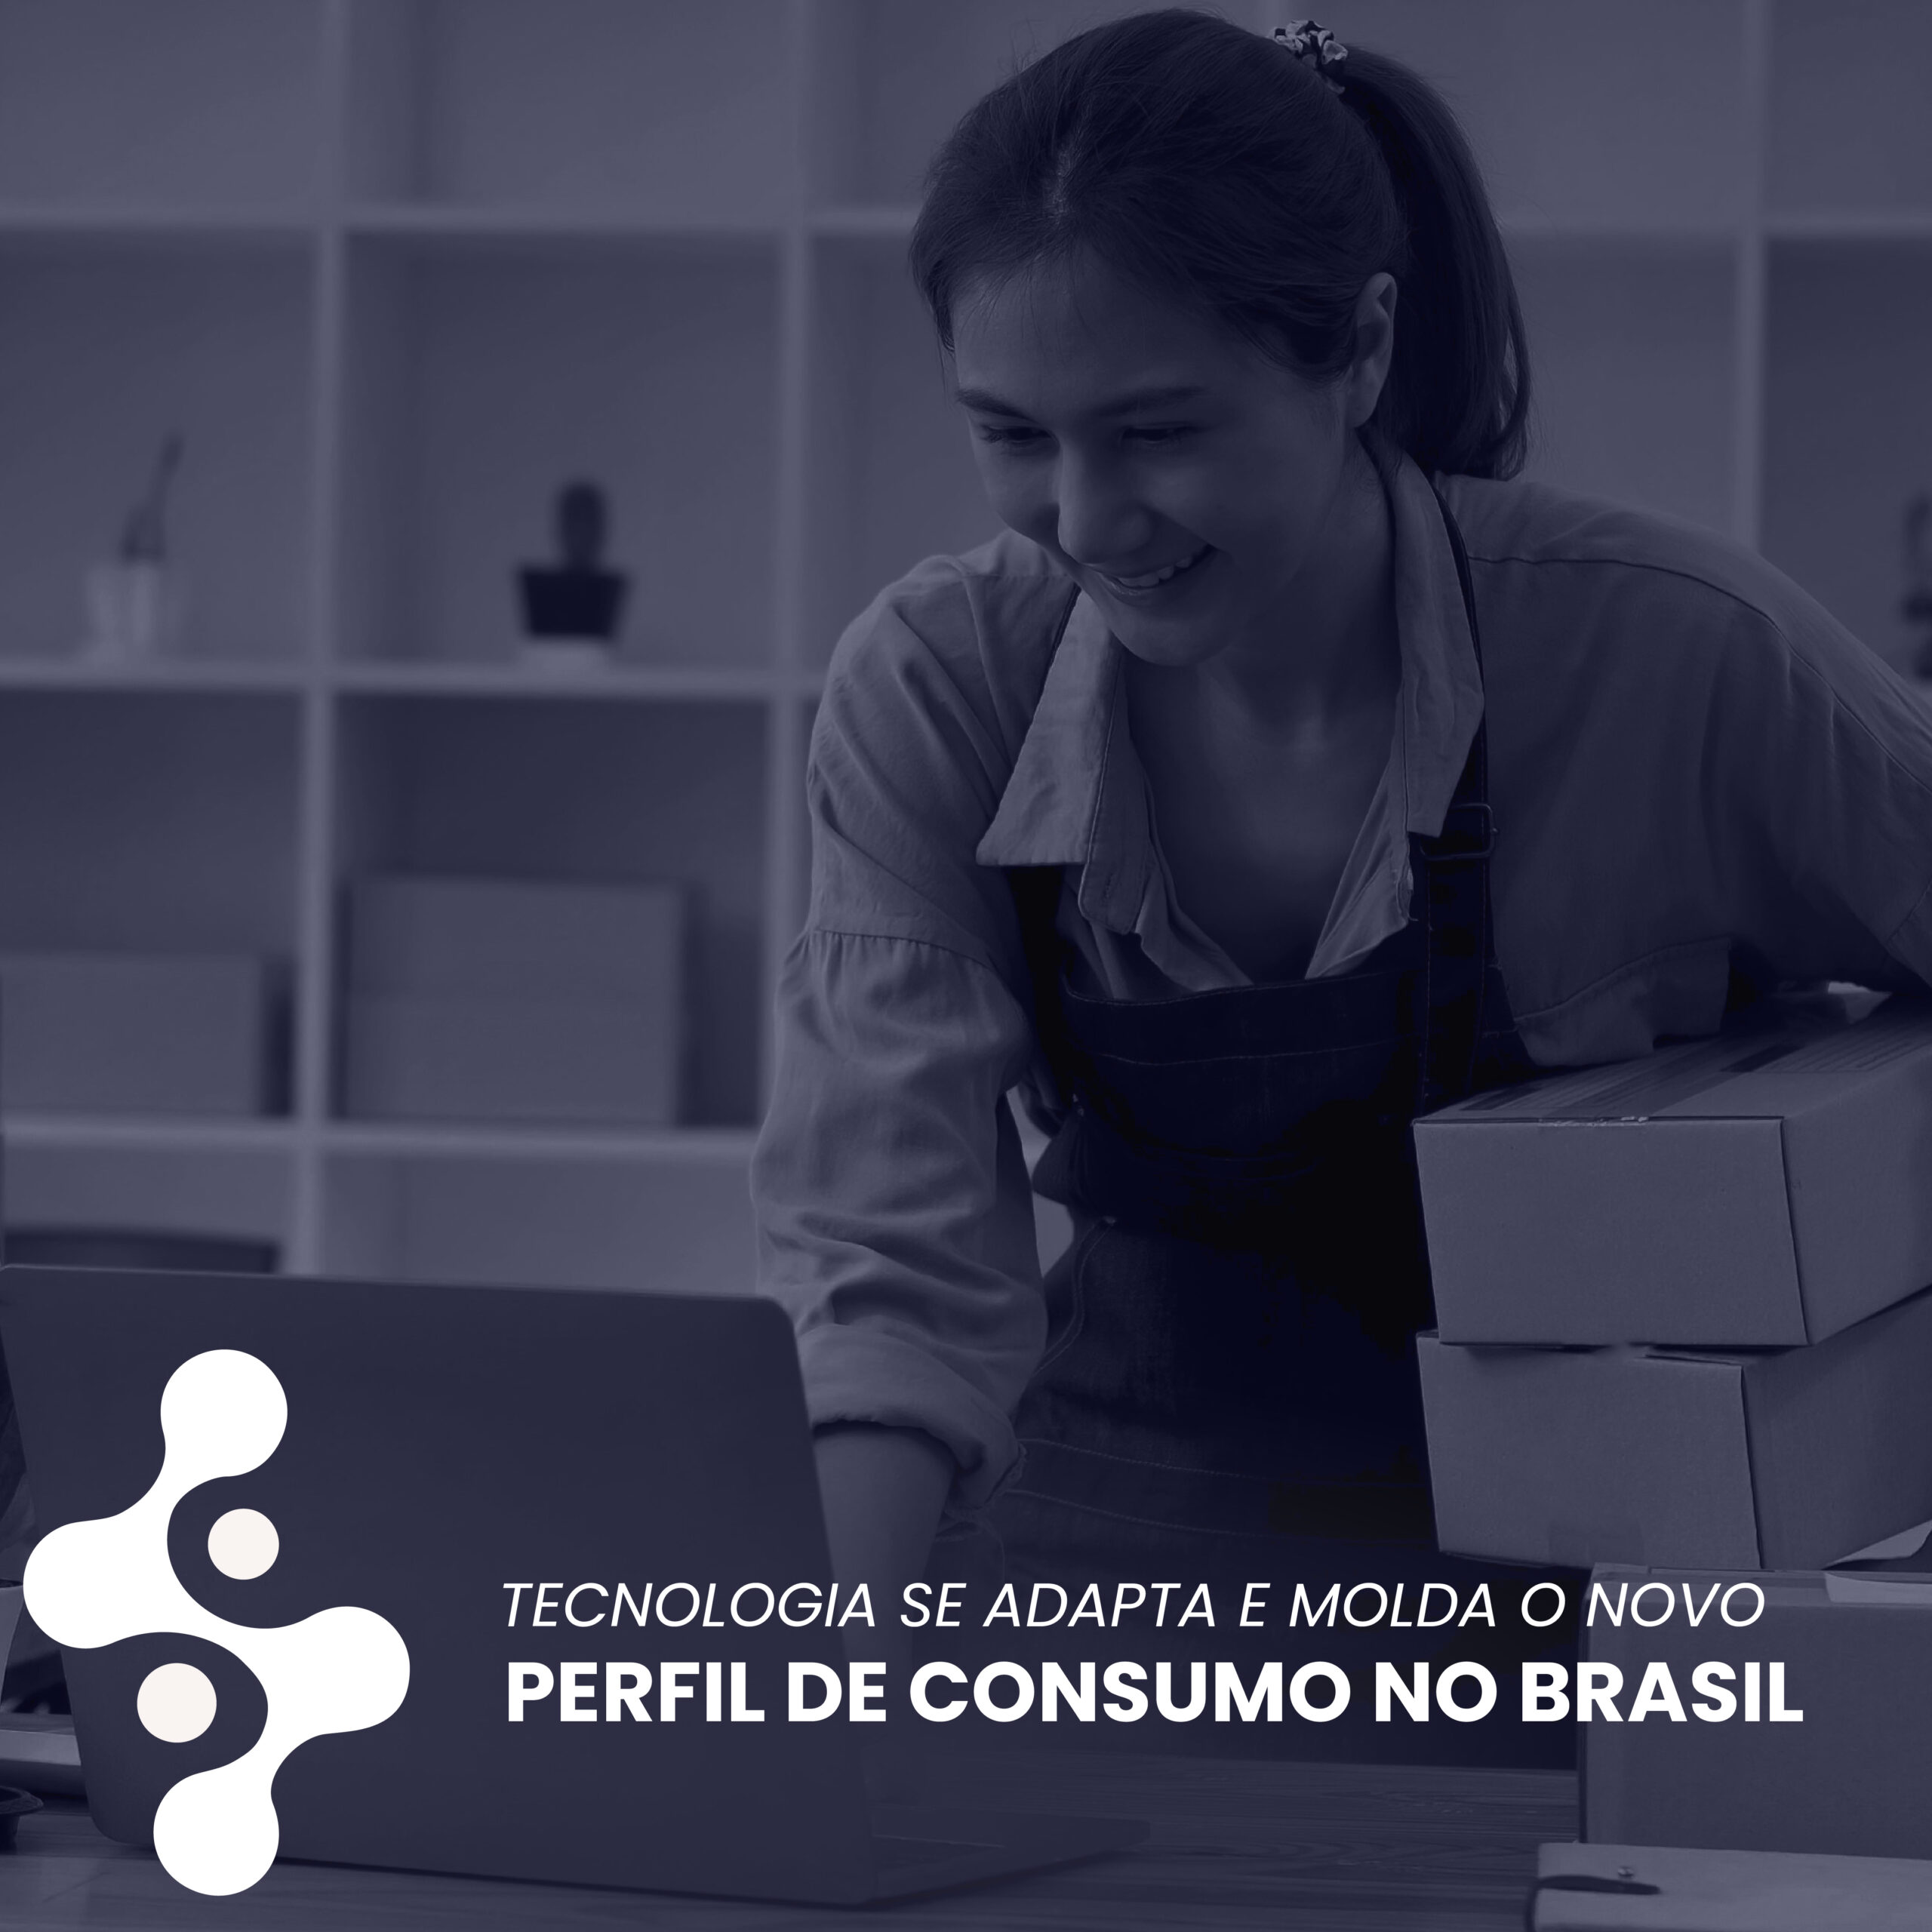 Tecnologia se adapta e molda o novo perfil de consumo no Brasil.